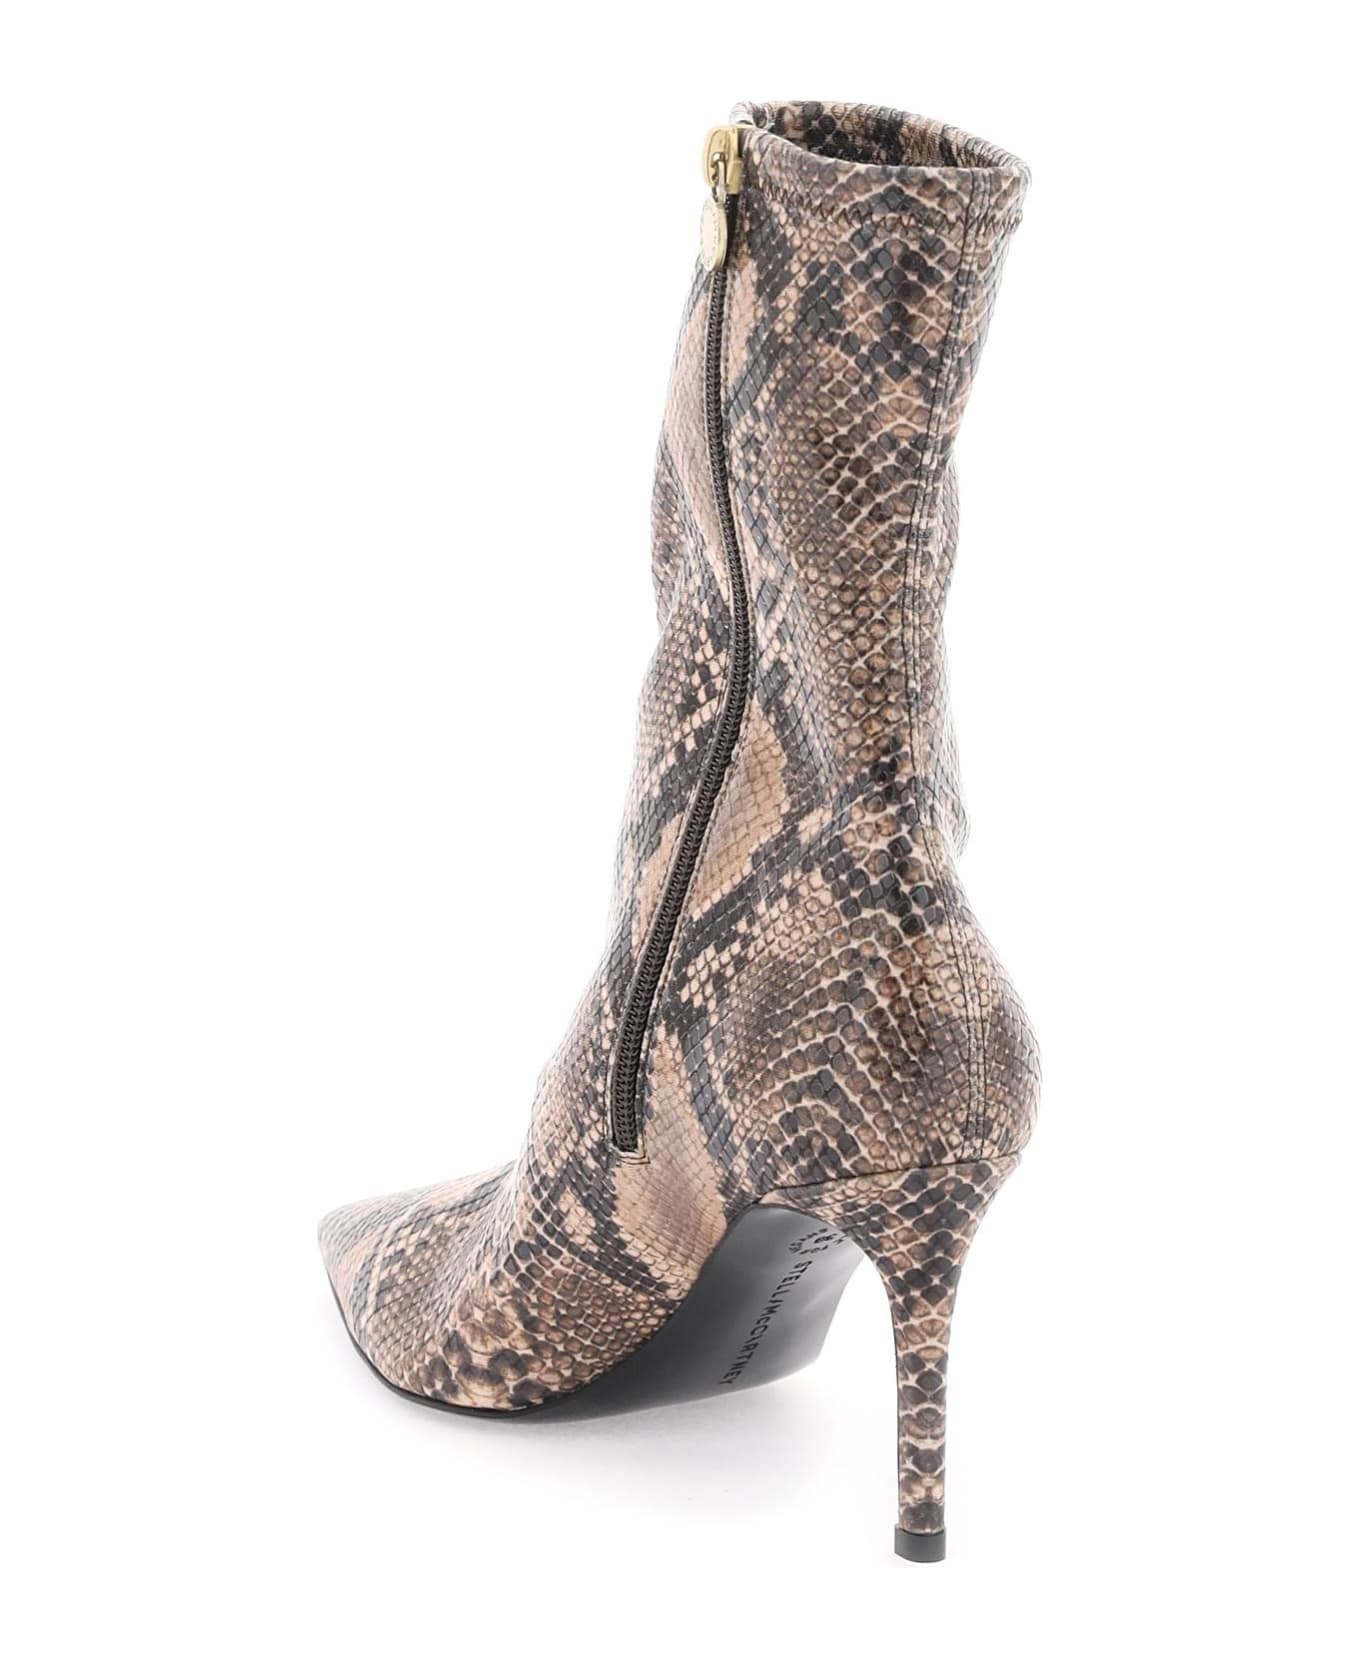 Stella McCartney Python Print Heeled Ankle Boots - COFFEE (Brown)